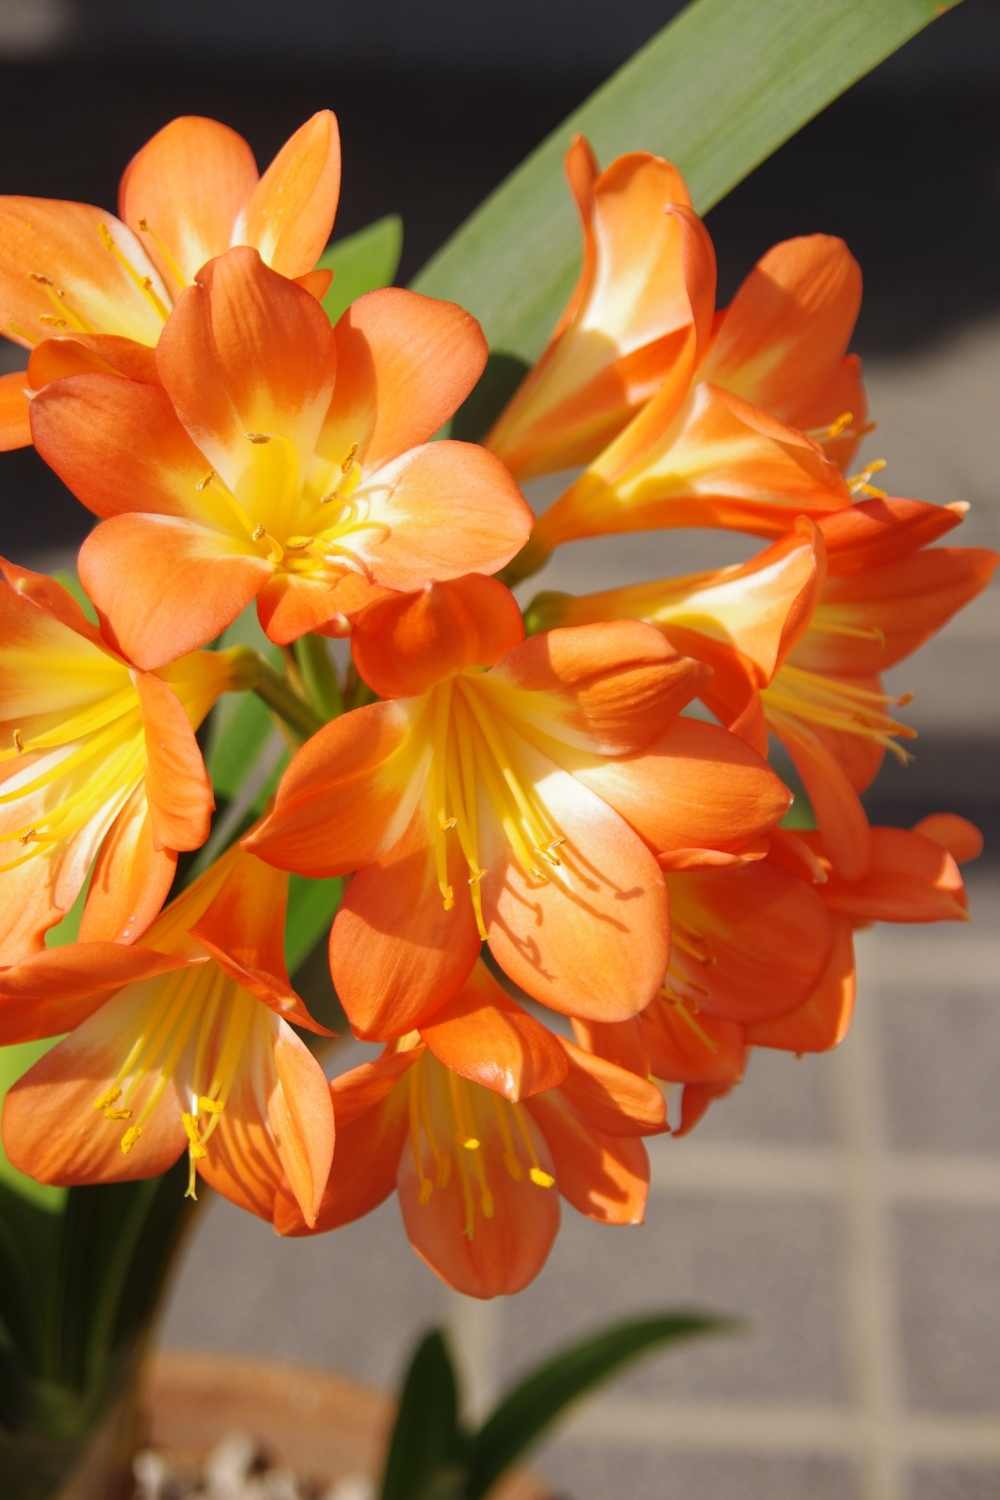 Kaffir lily or Clivia